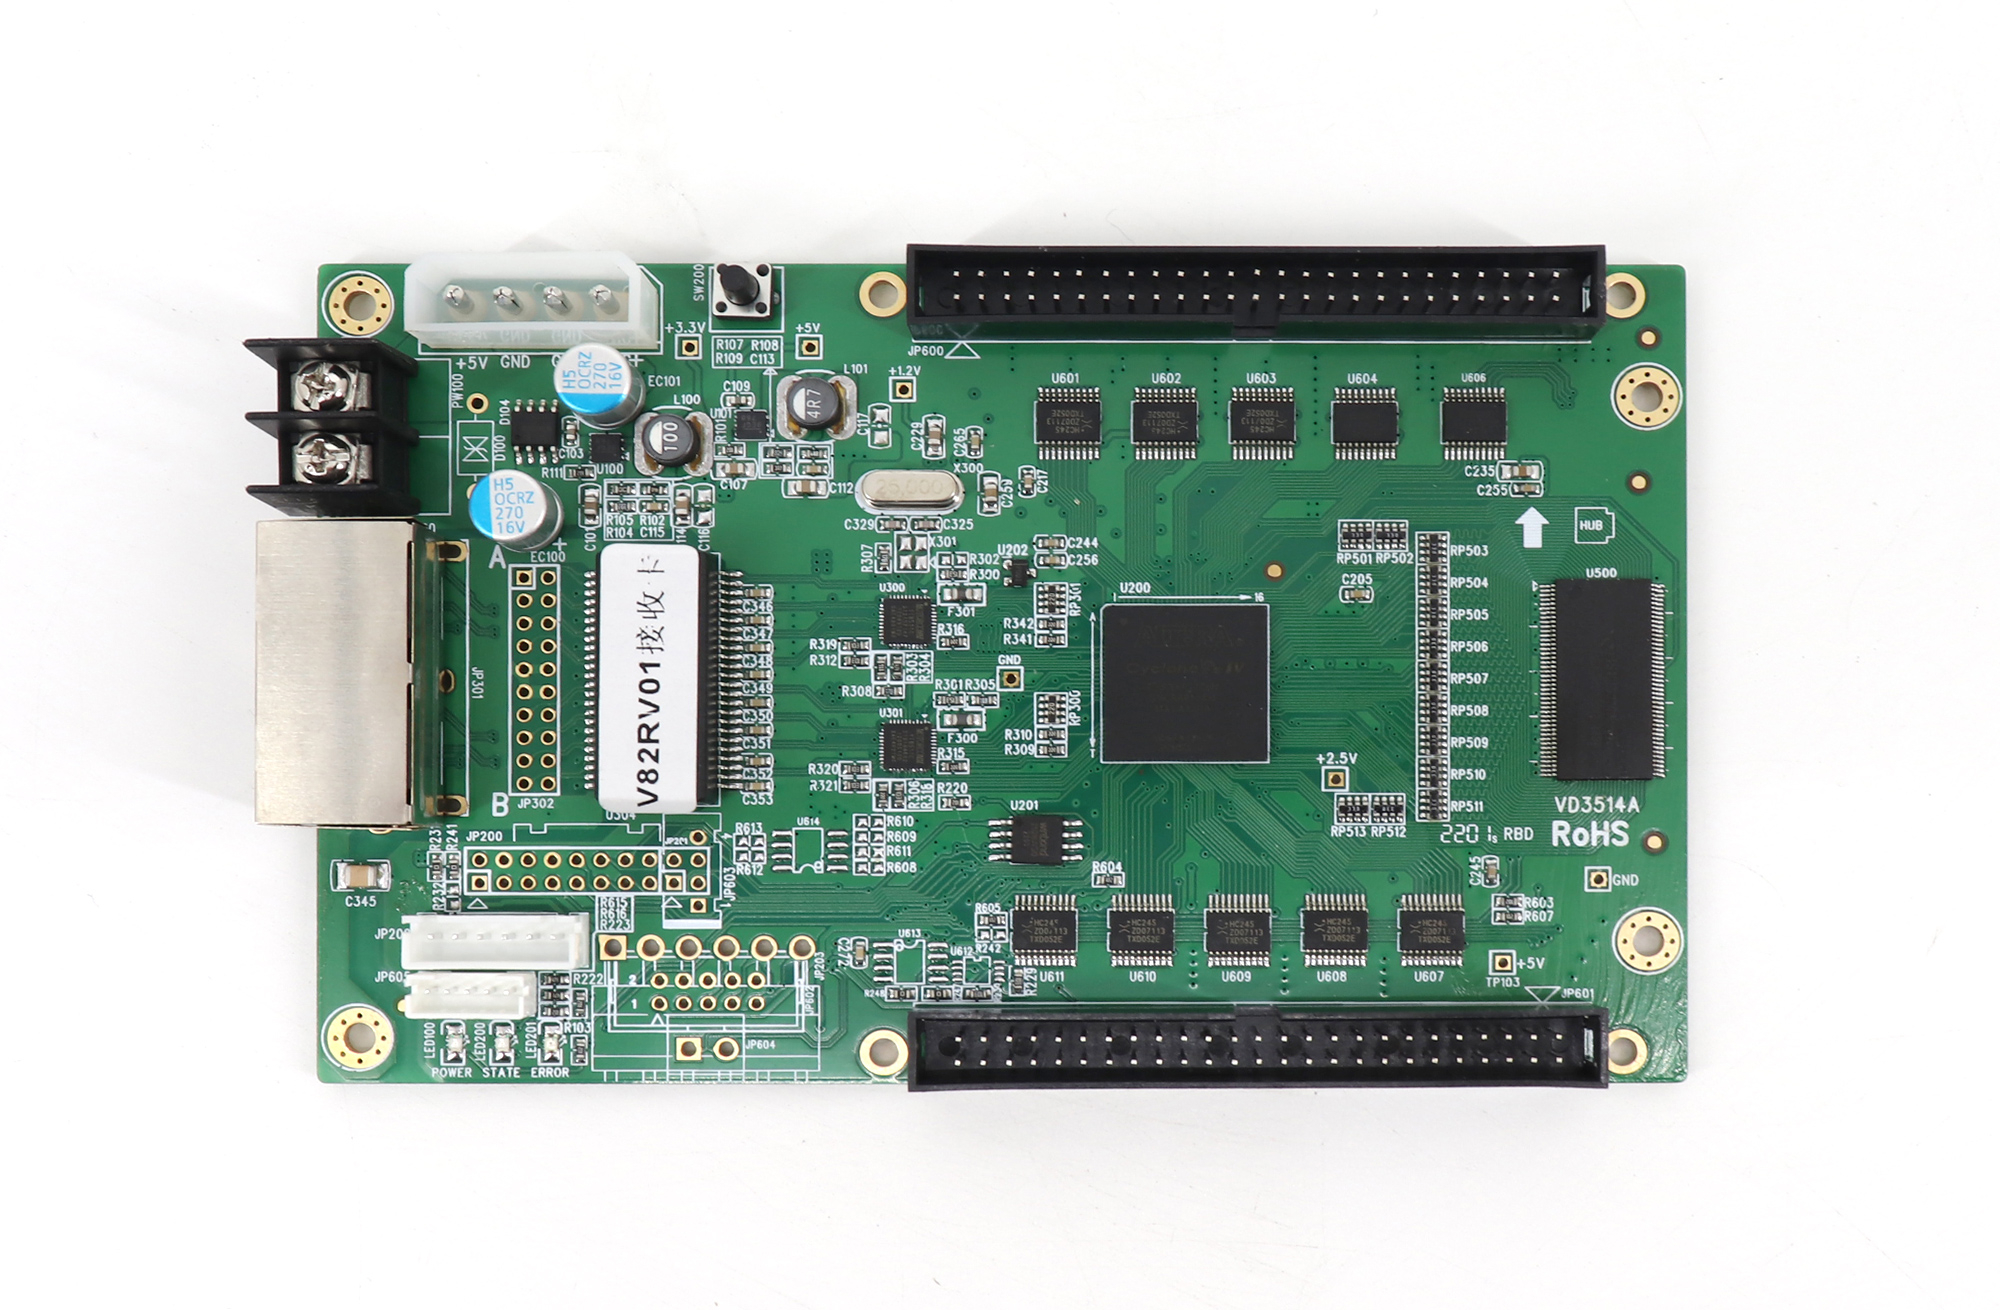 ZDEC V82RV01 S82S1011 LED Display Receiving Card